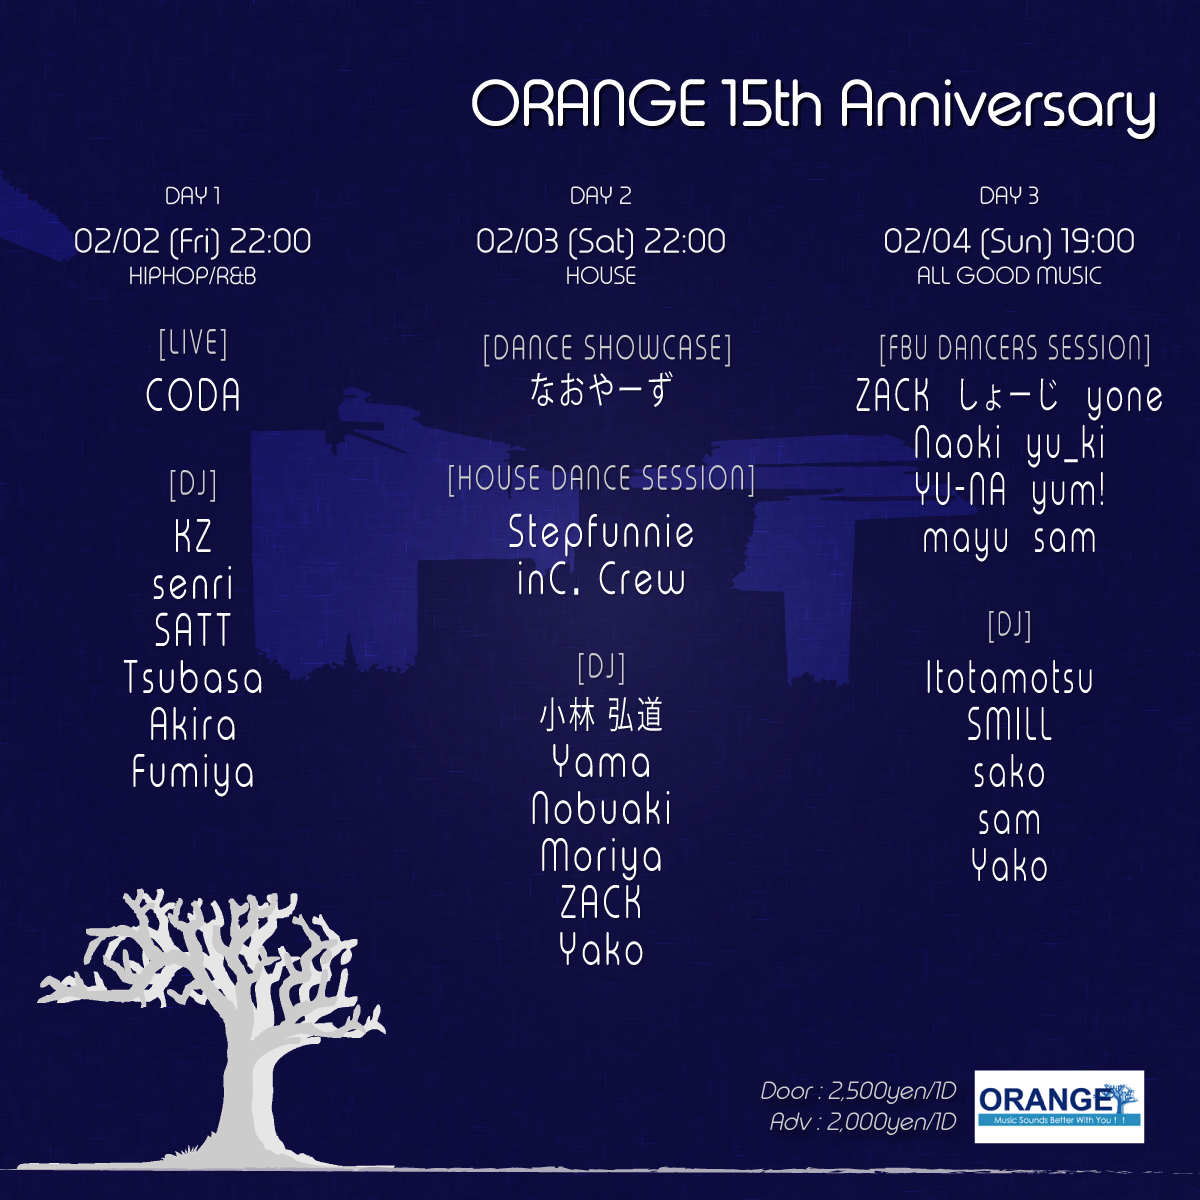 ORANGE 15th Anniversary Party Day 3